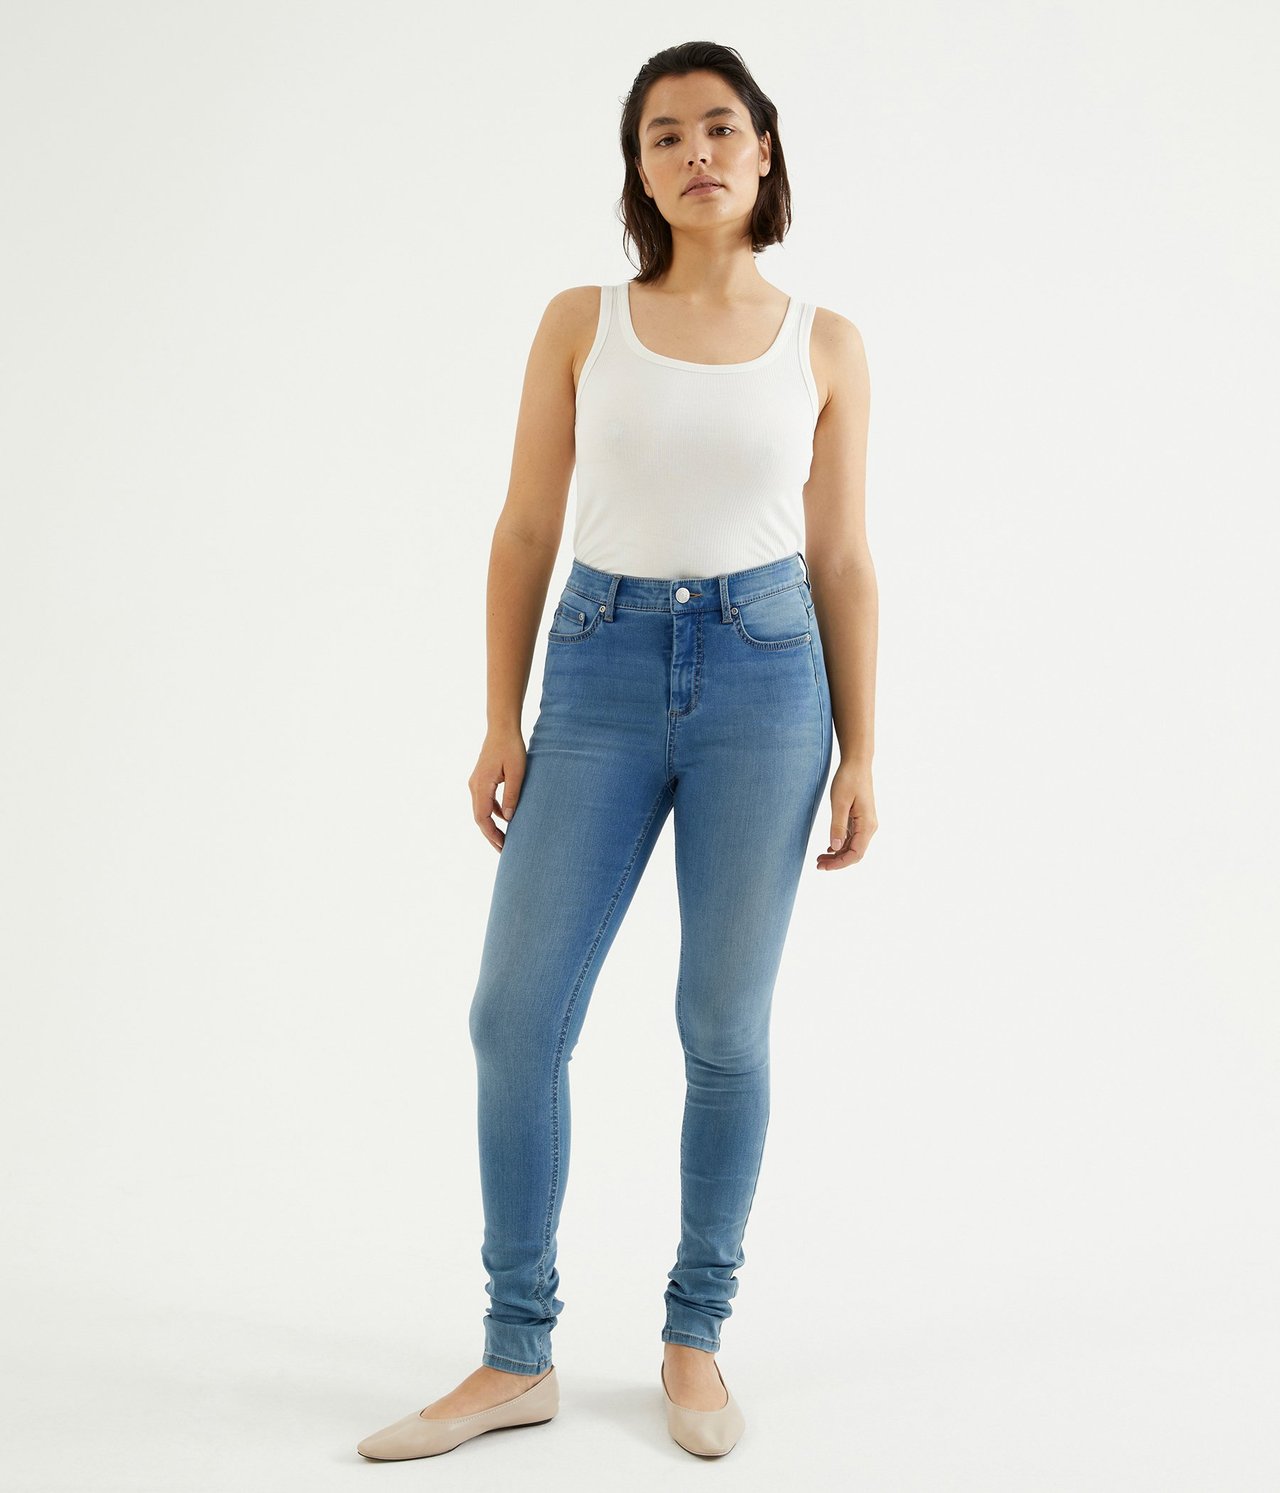 Super slim jeans extra long leg - Denim - 1